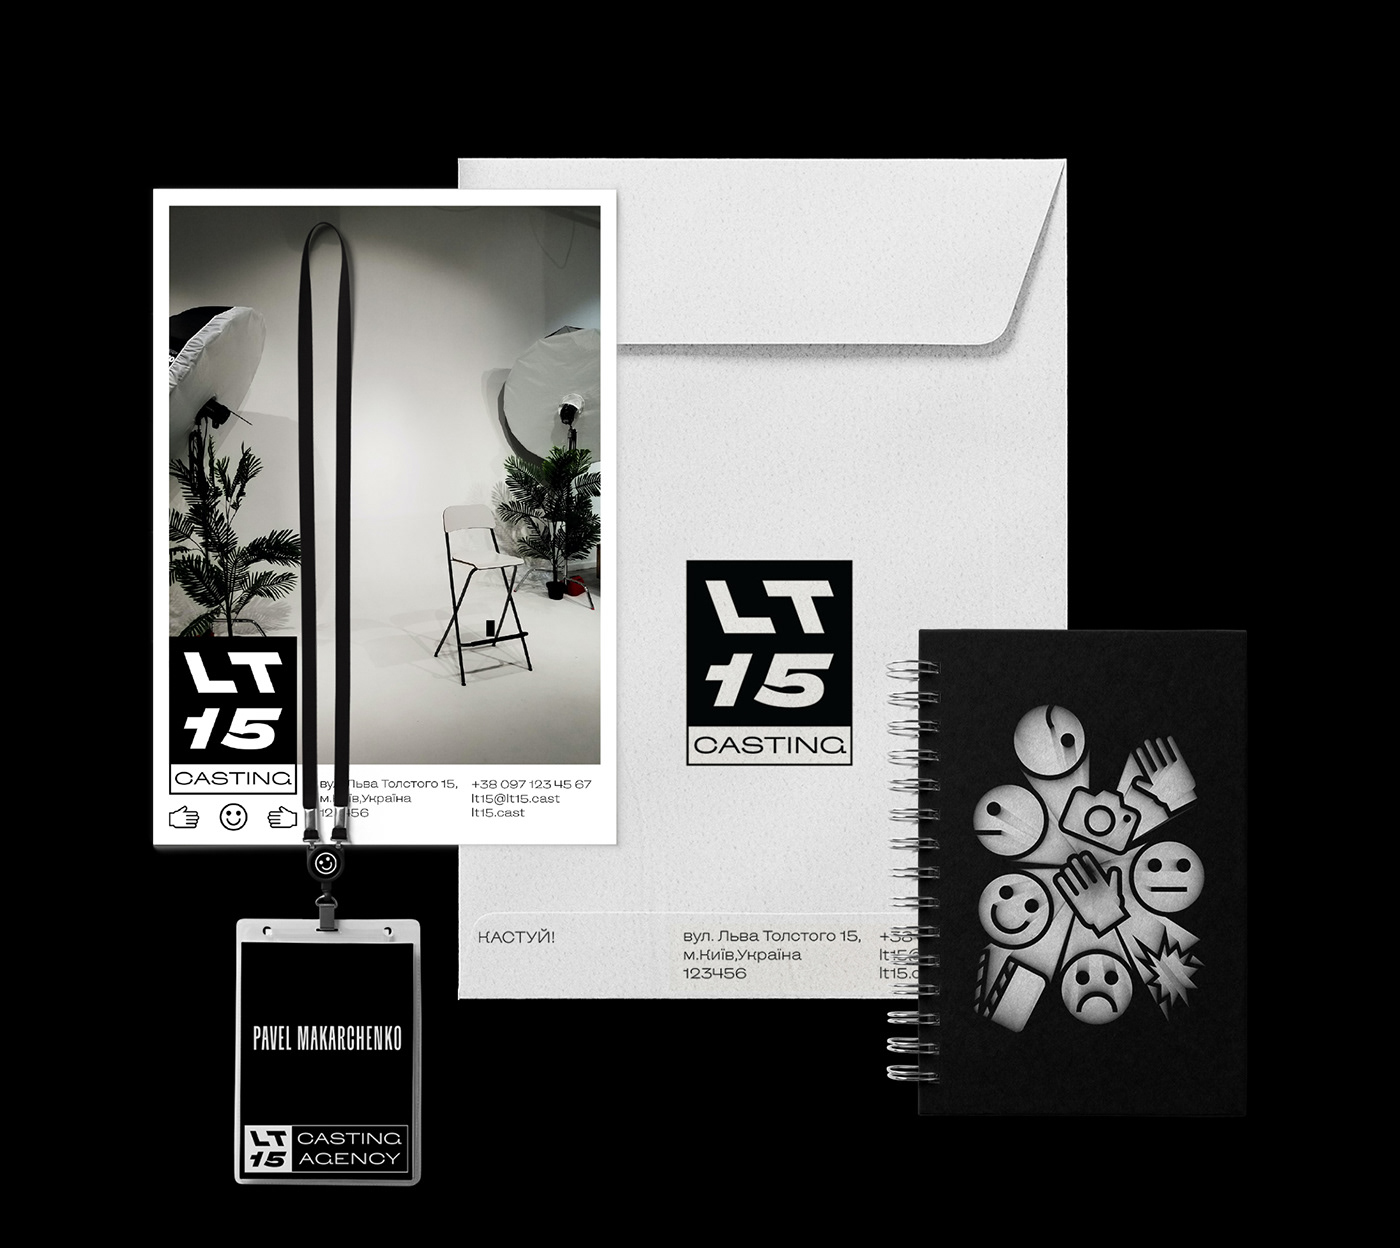 agency black and white branding  casting Corporate Identity monochrome smile Corporate Design dark brand identity